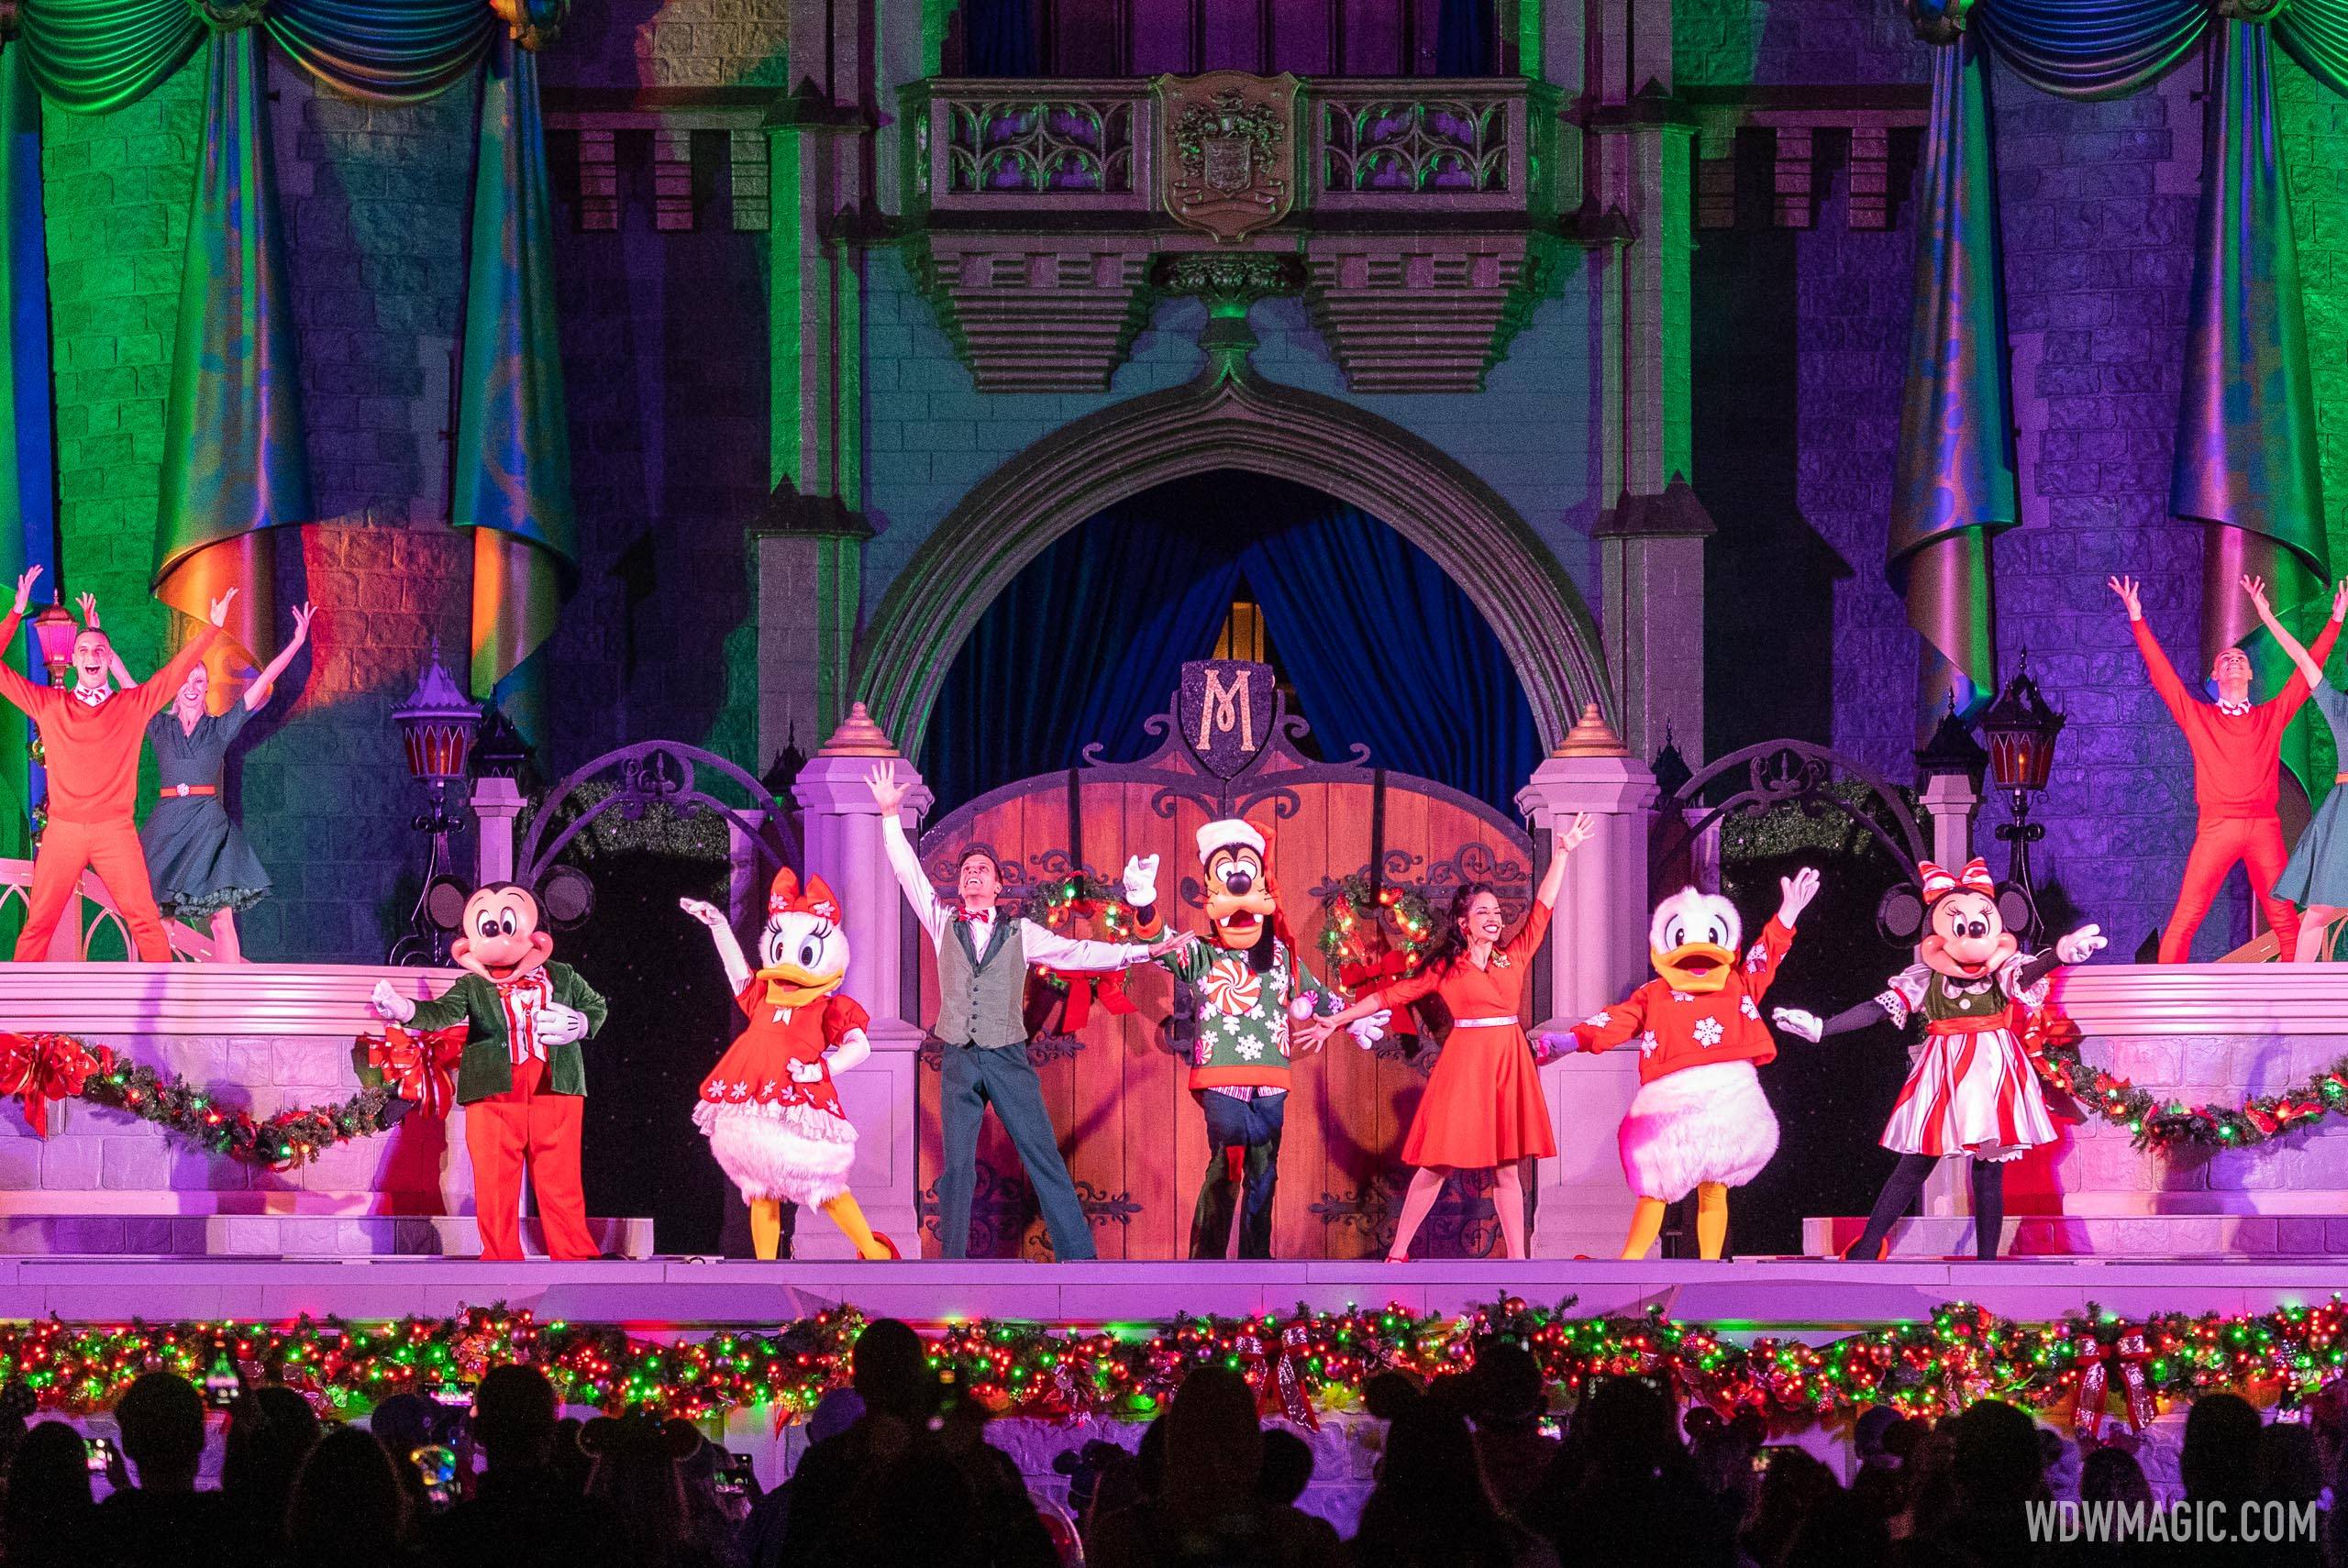 Mickey and Minnie's Very Merry Memories opening night